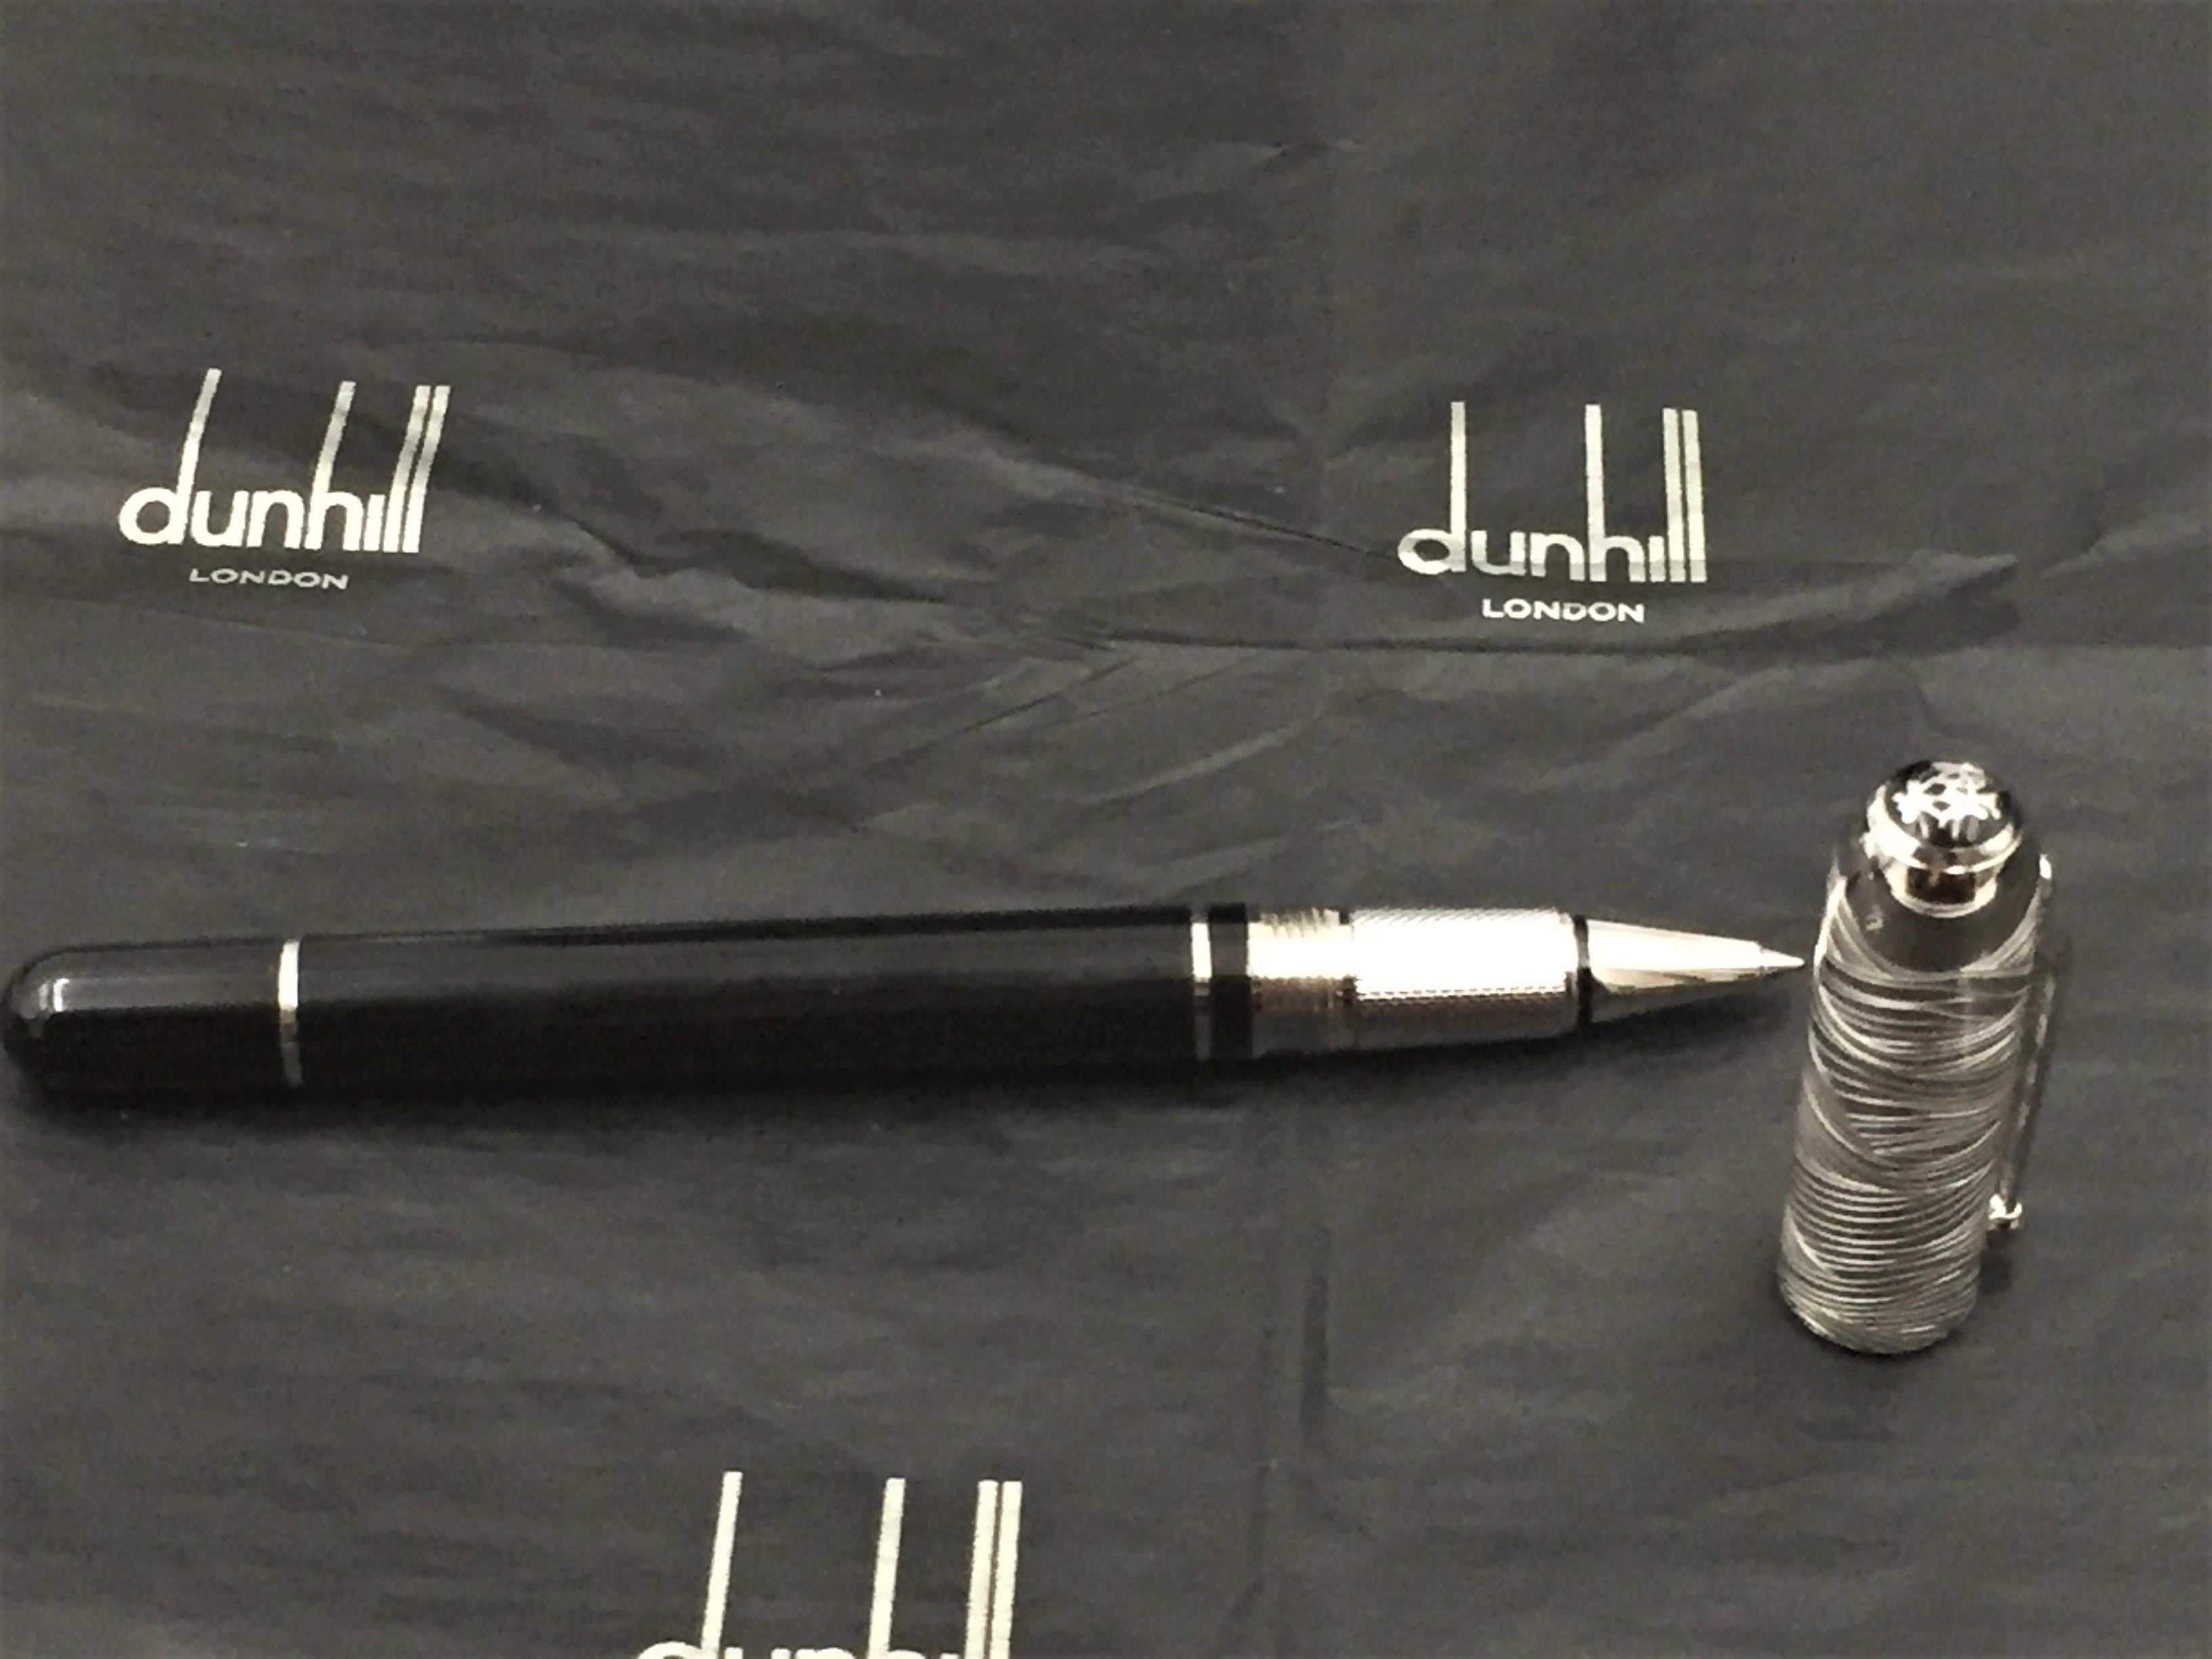 dunhill pen